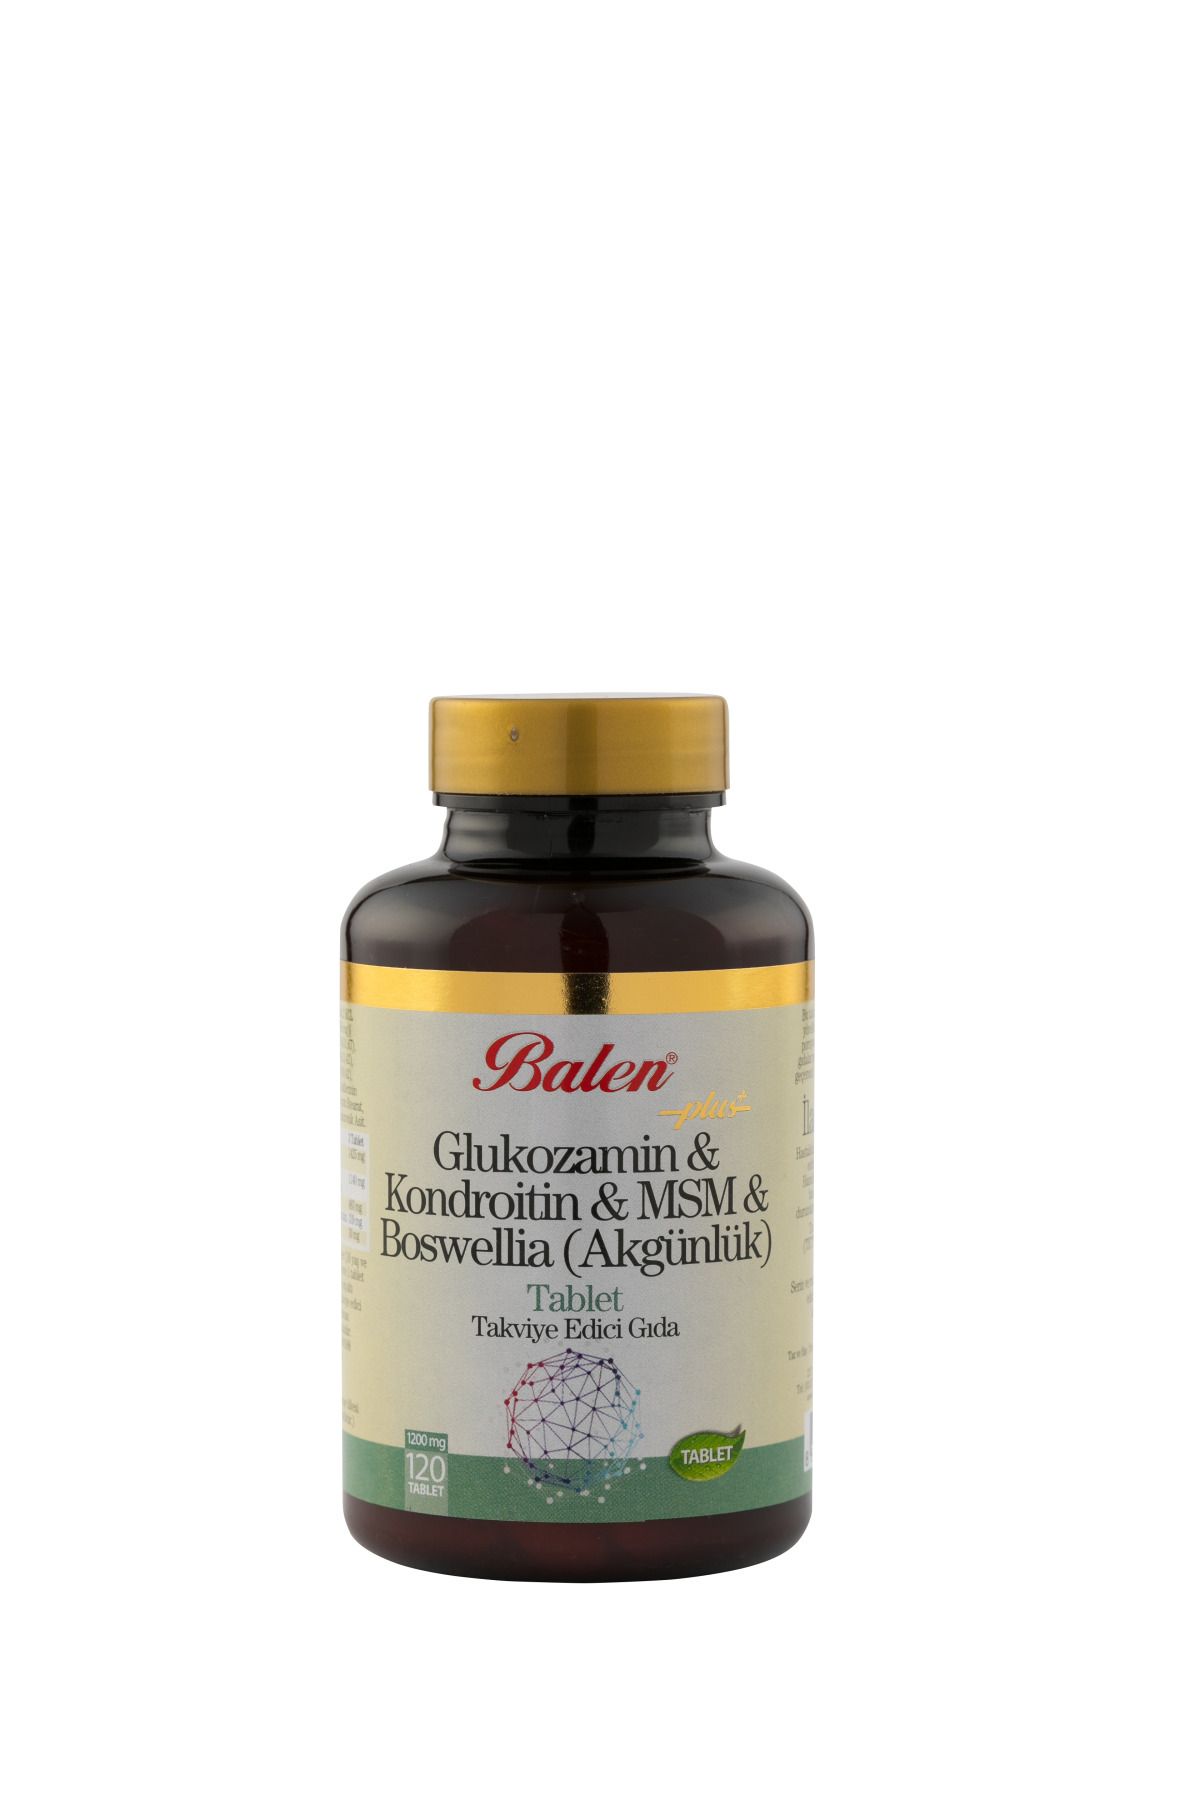 Balen Glukozamin Kondroitin Msm Boswelia Tablet 1200 Mg* 120 Tablet